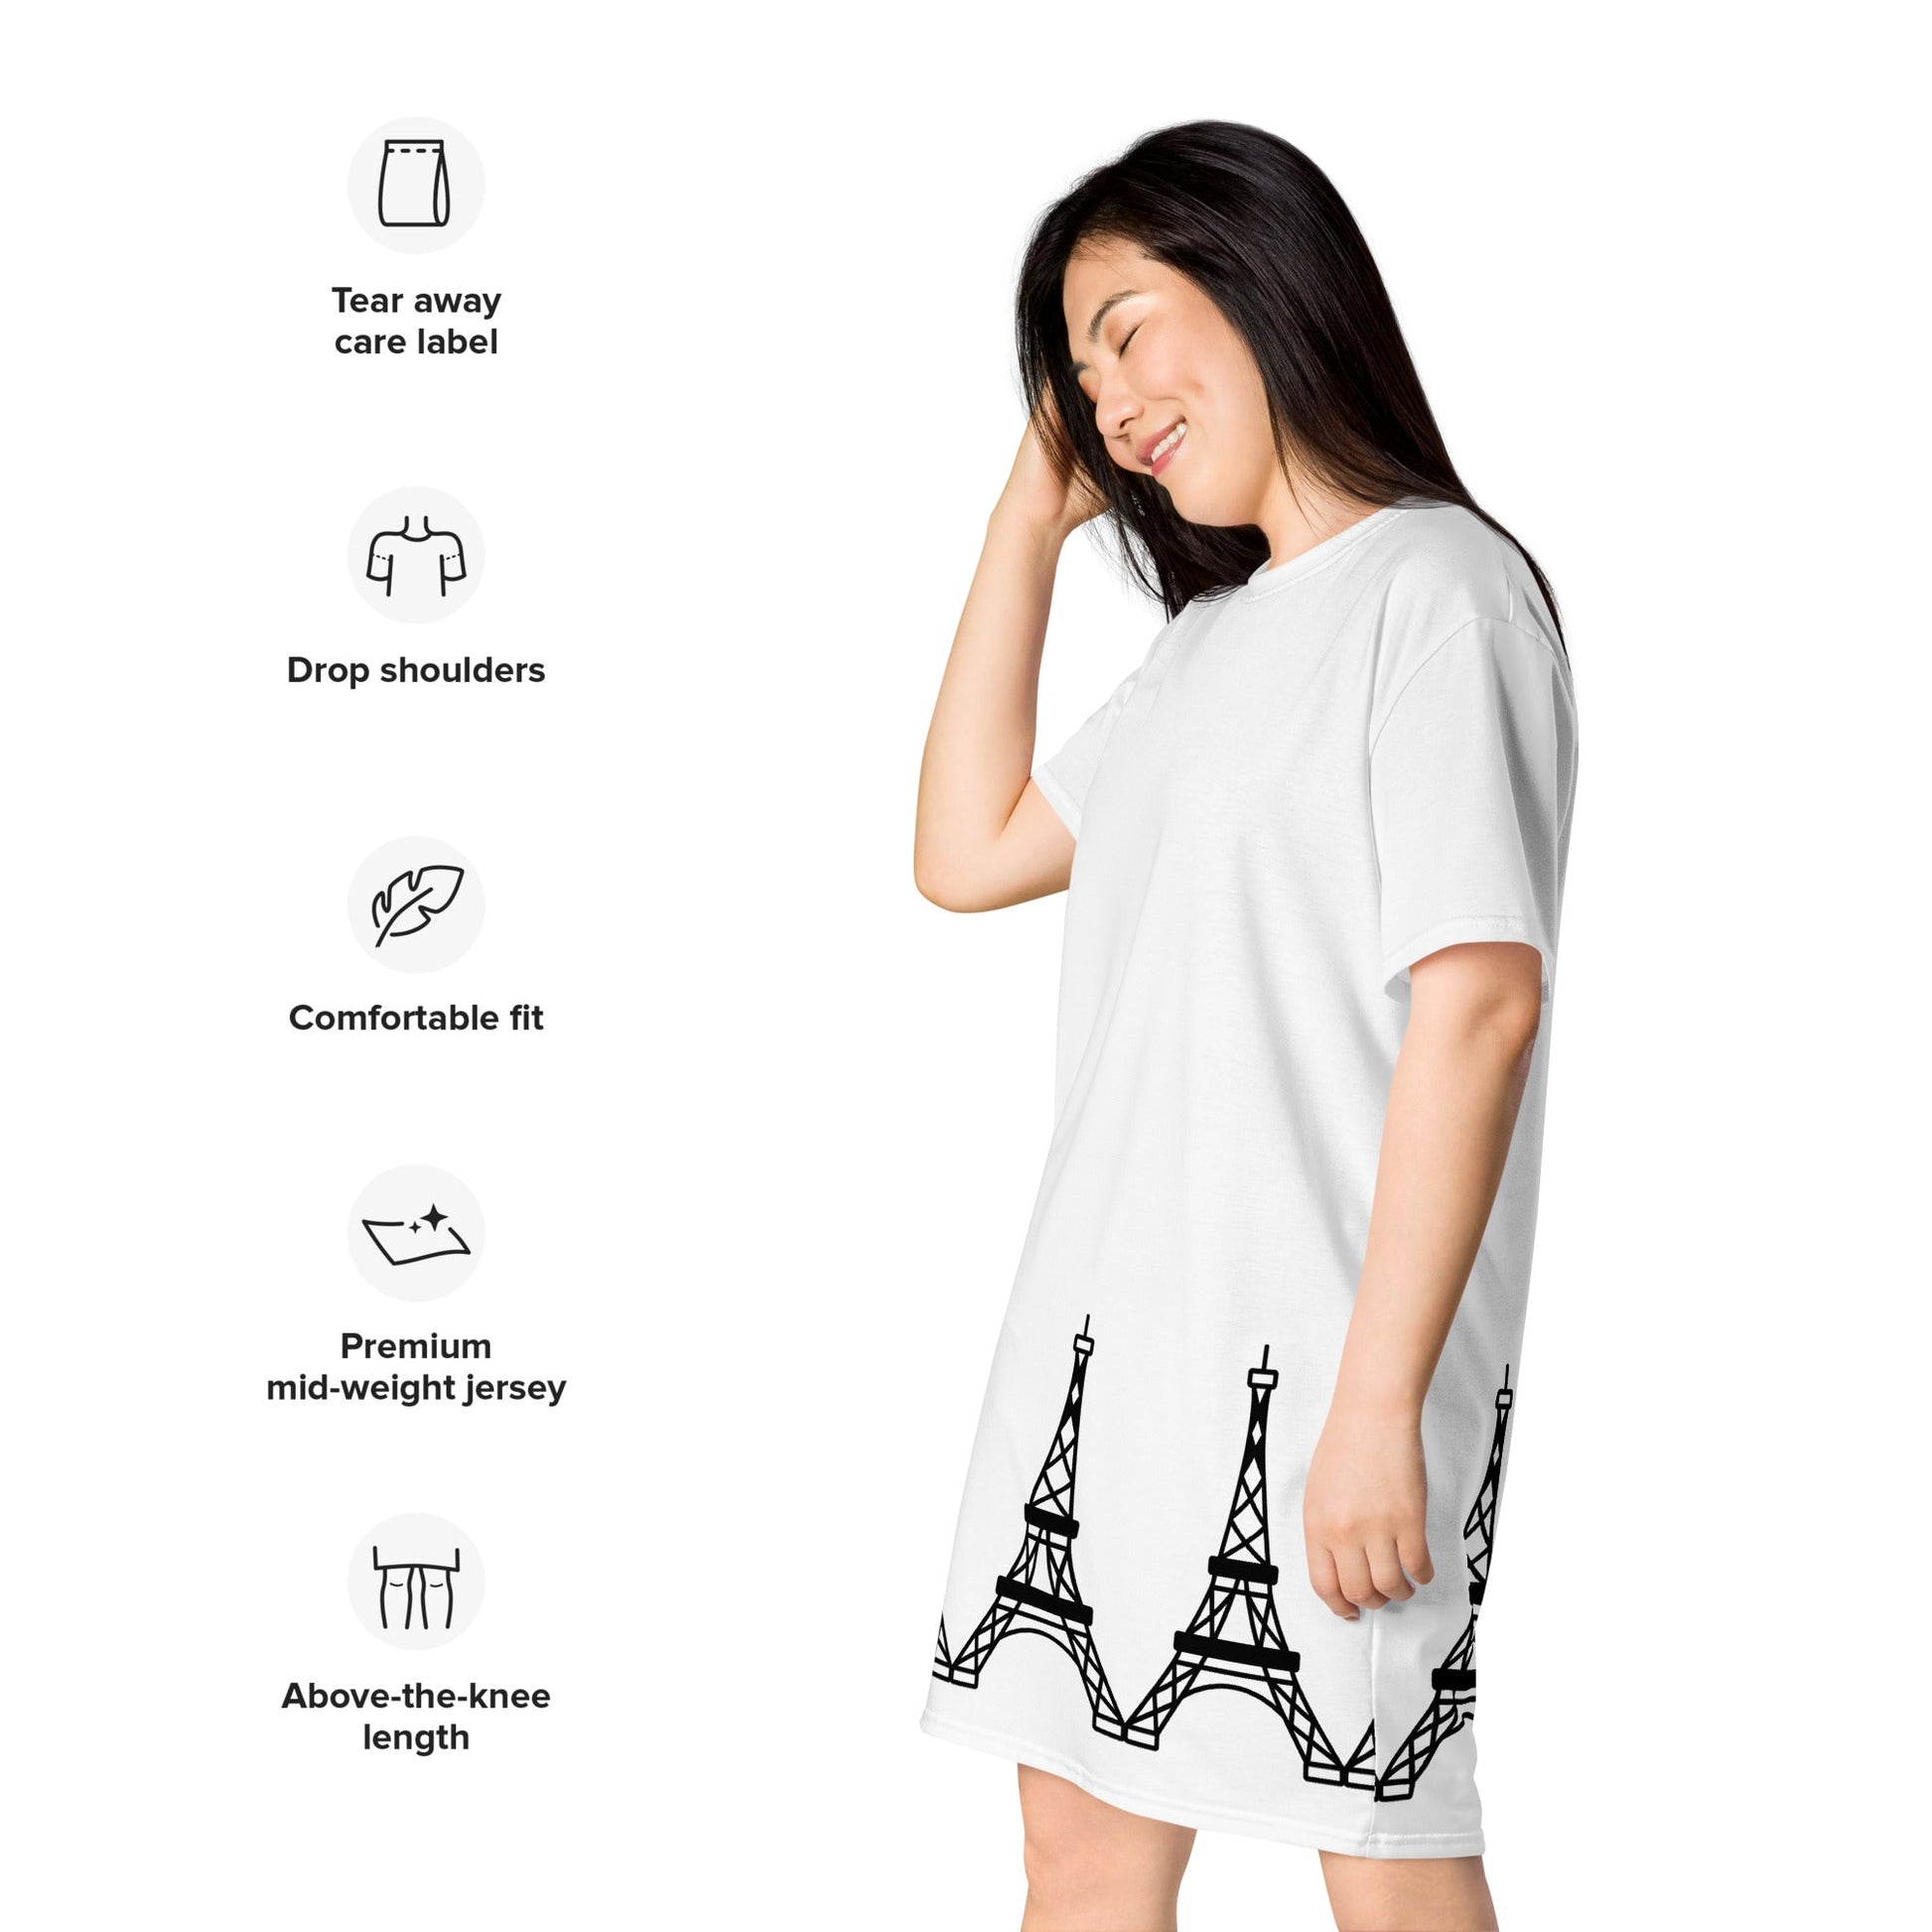 Parisian Dream: White T-Shirt Dress with Eiffel Tower Print – Embrace French Elegance